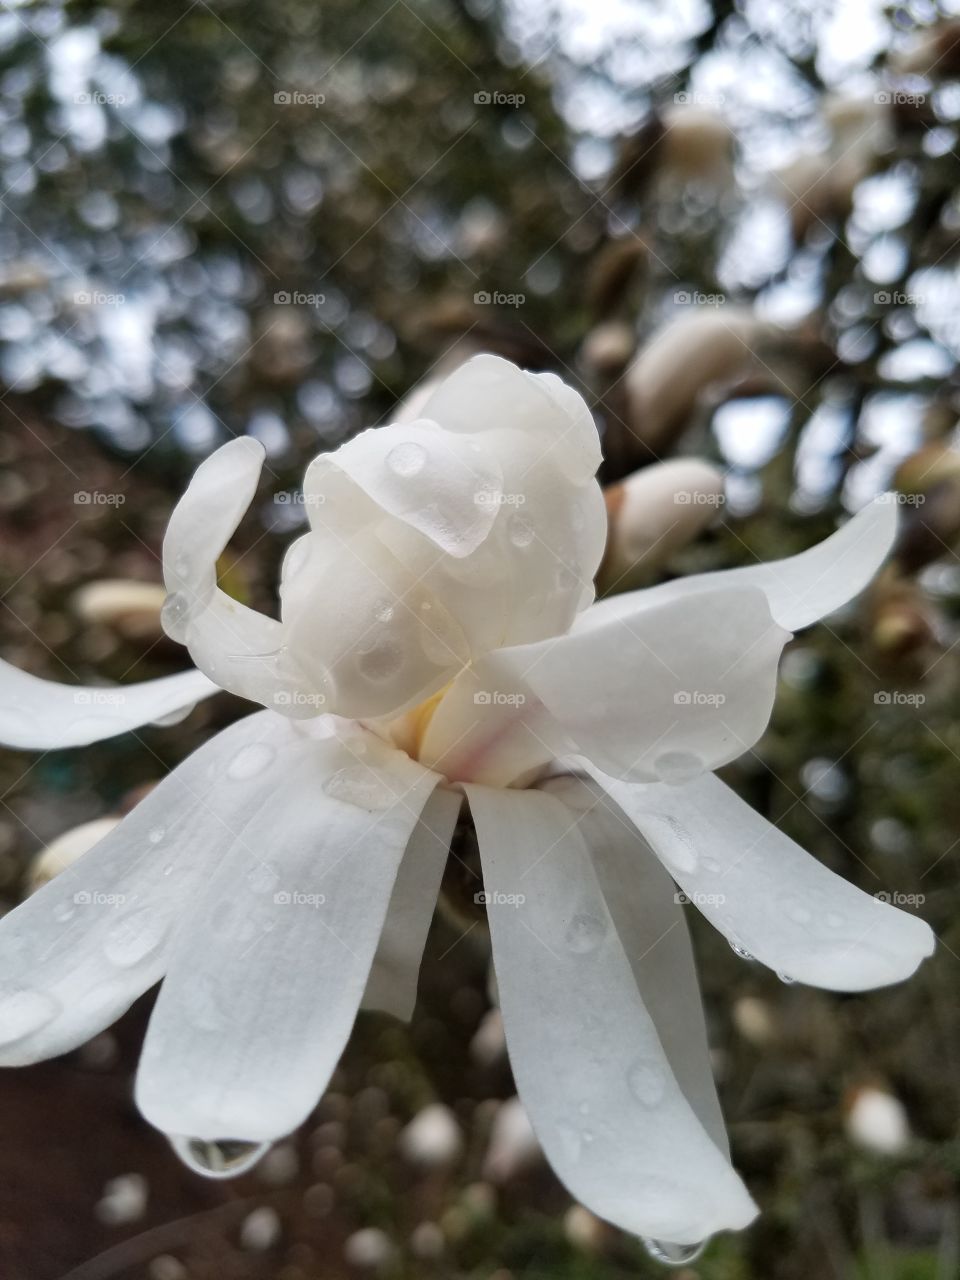 Wet, floppy flower after the rain.